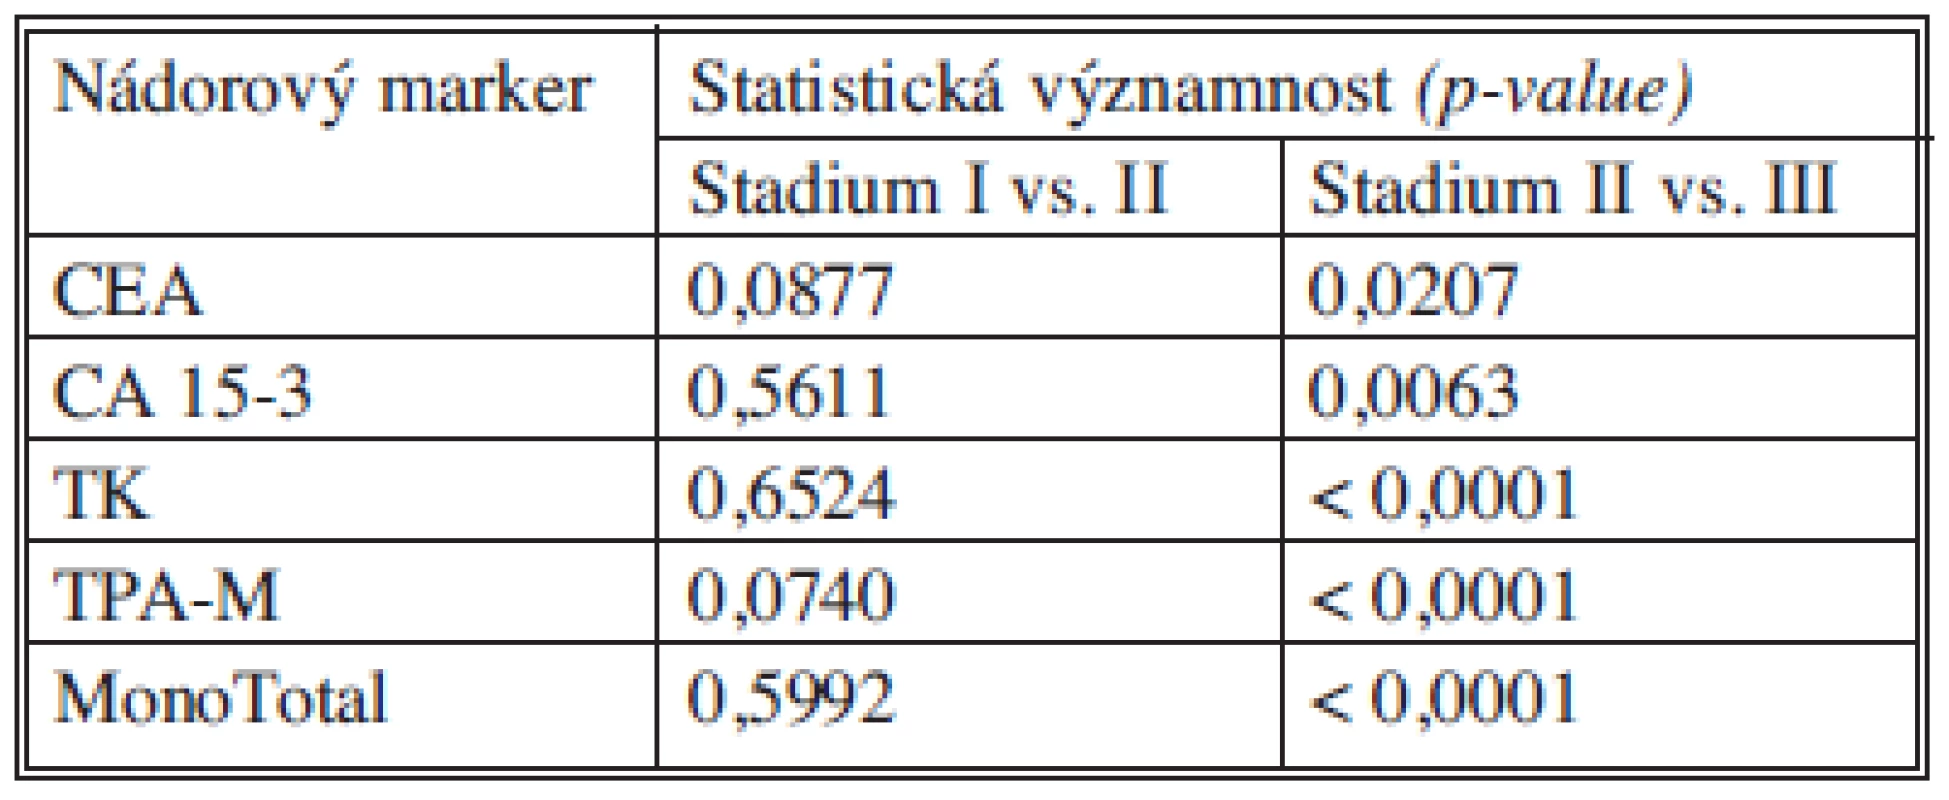 Statistické významnosti nádorových markerů
Tab. 12. Statistical significance of tumor markers